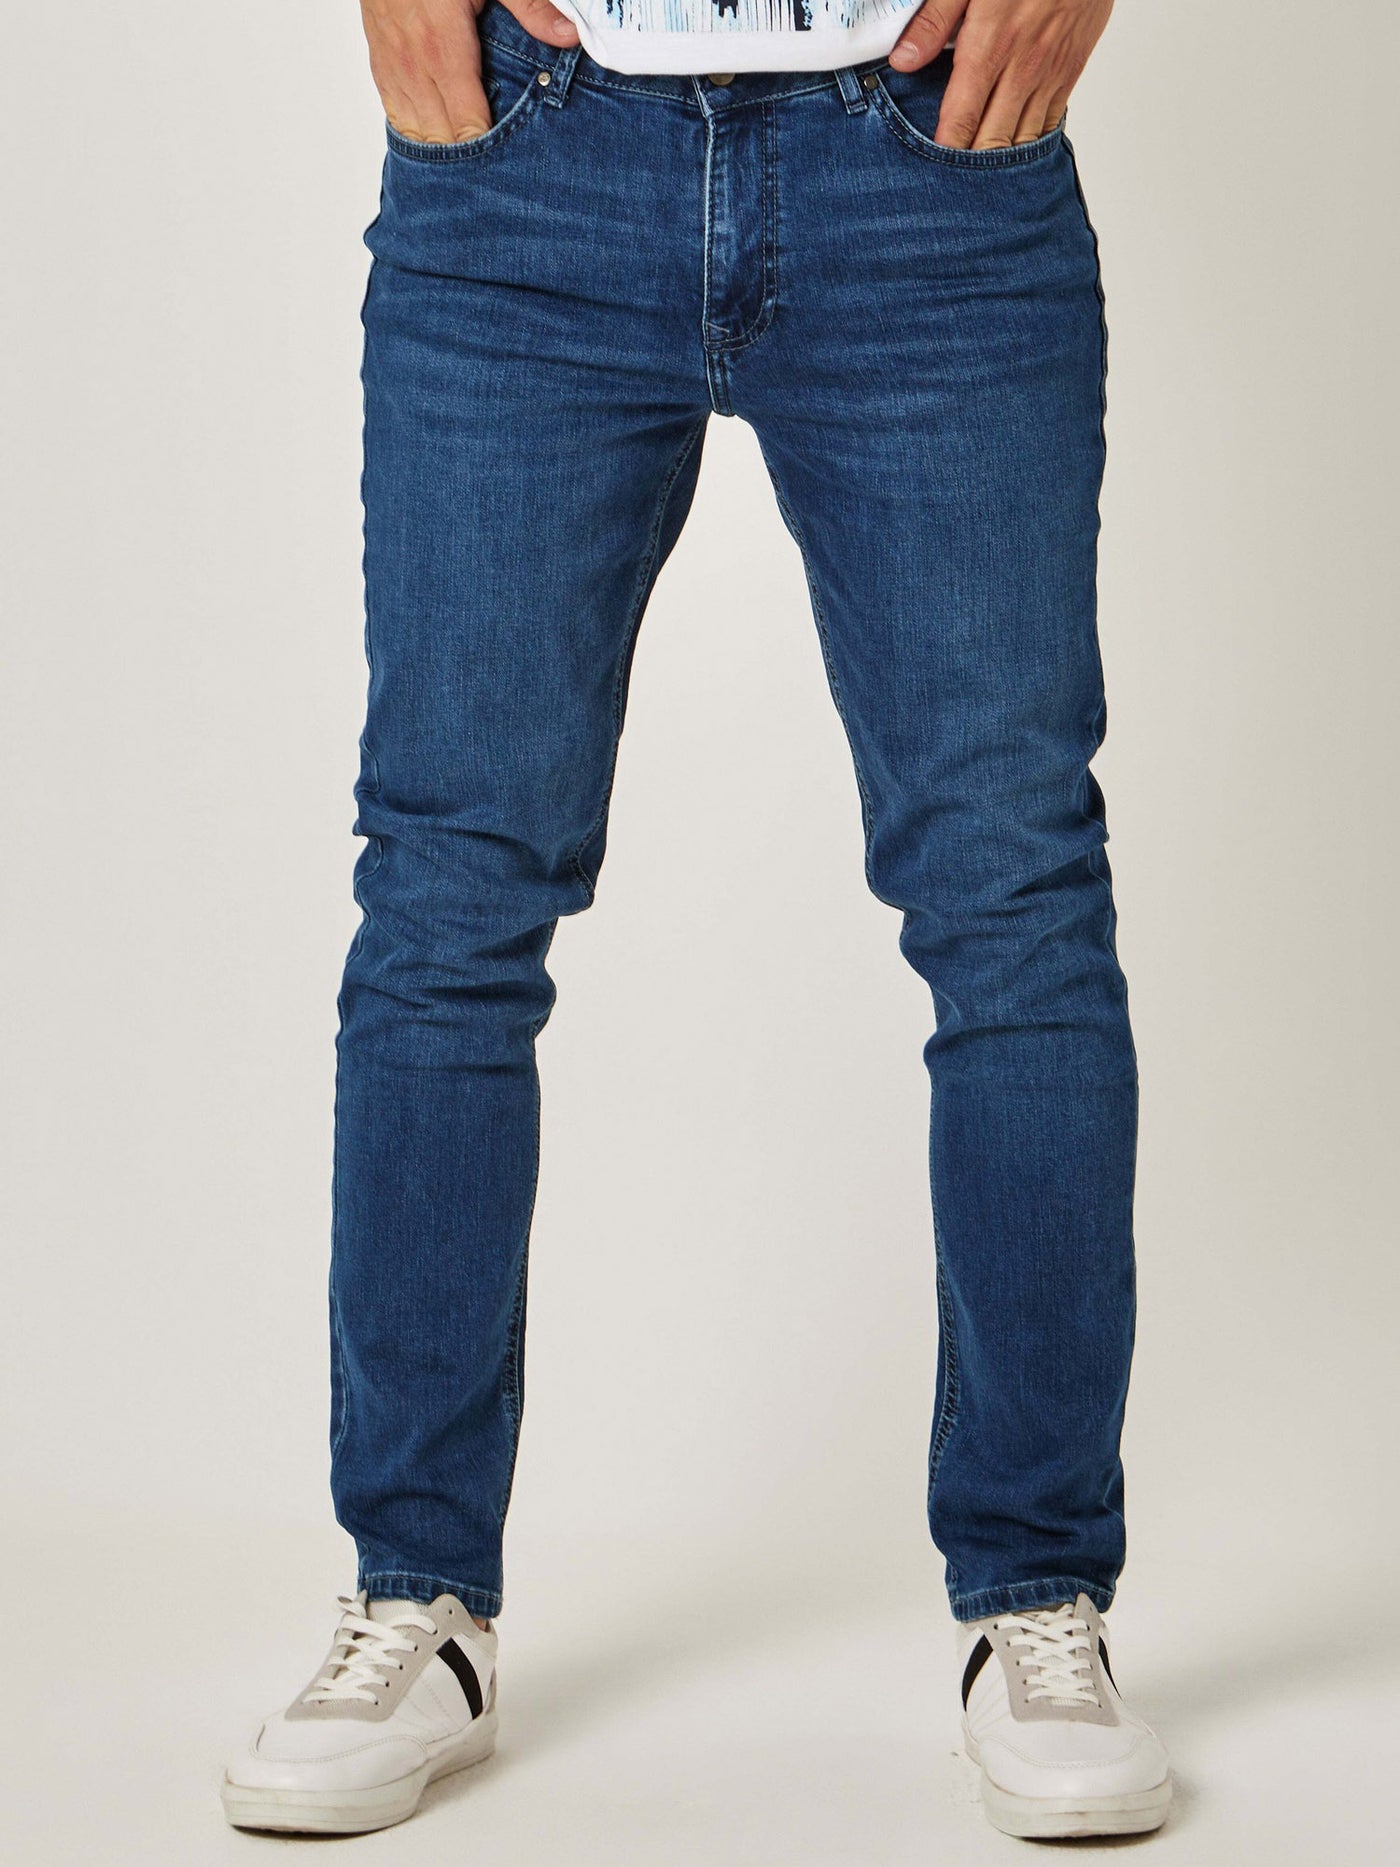 Jeans - Regular Fit - Low Waist